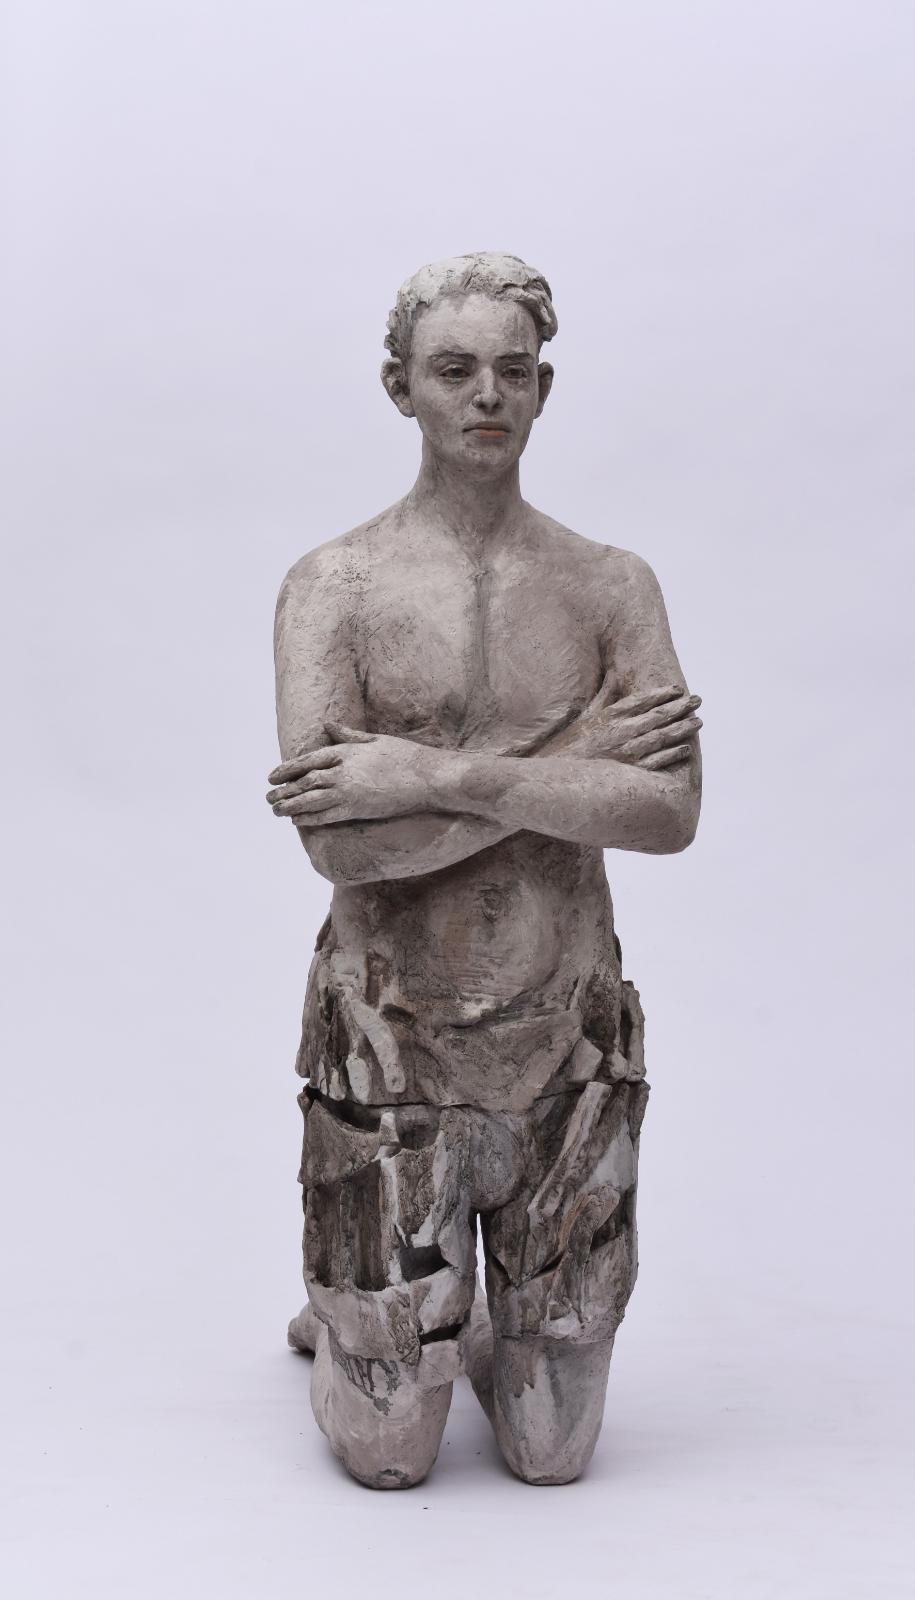 Silvia Siemes, gr. Knieender, 2021, Terrakotta, H.: 130 cm, Preis auf Anfrage, sis016ve